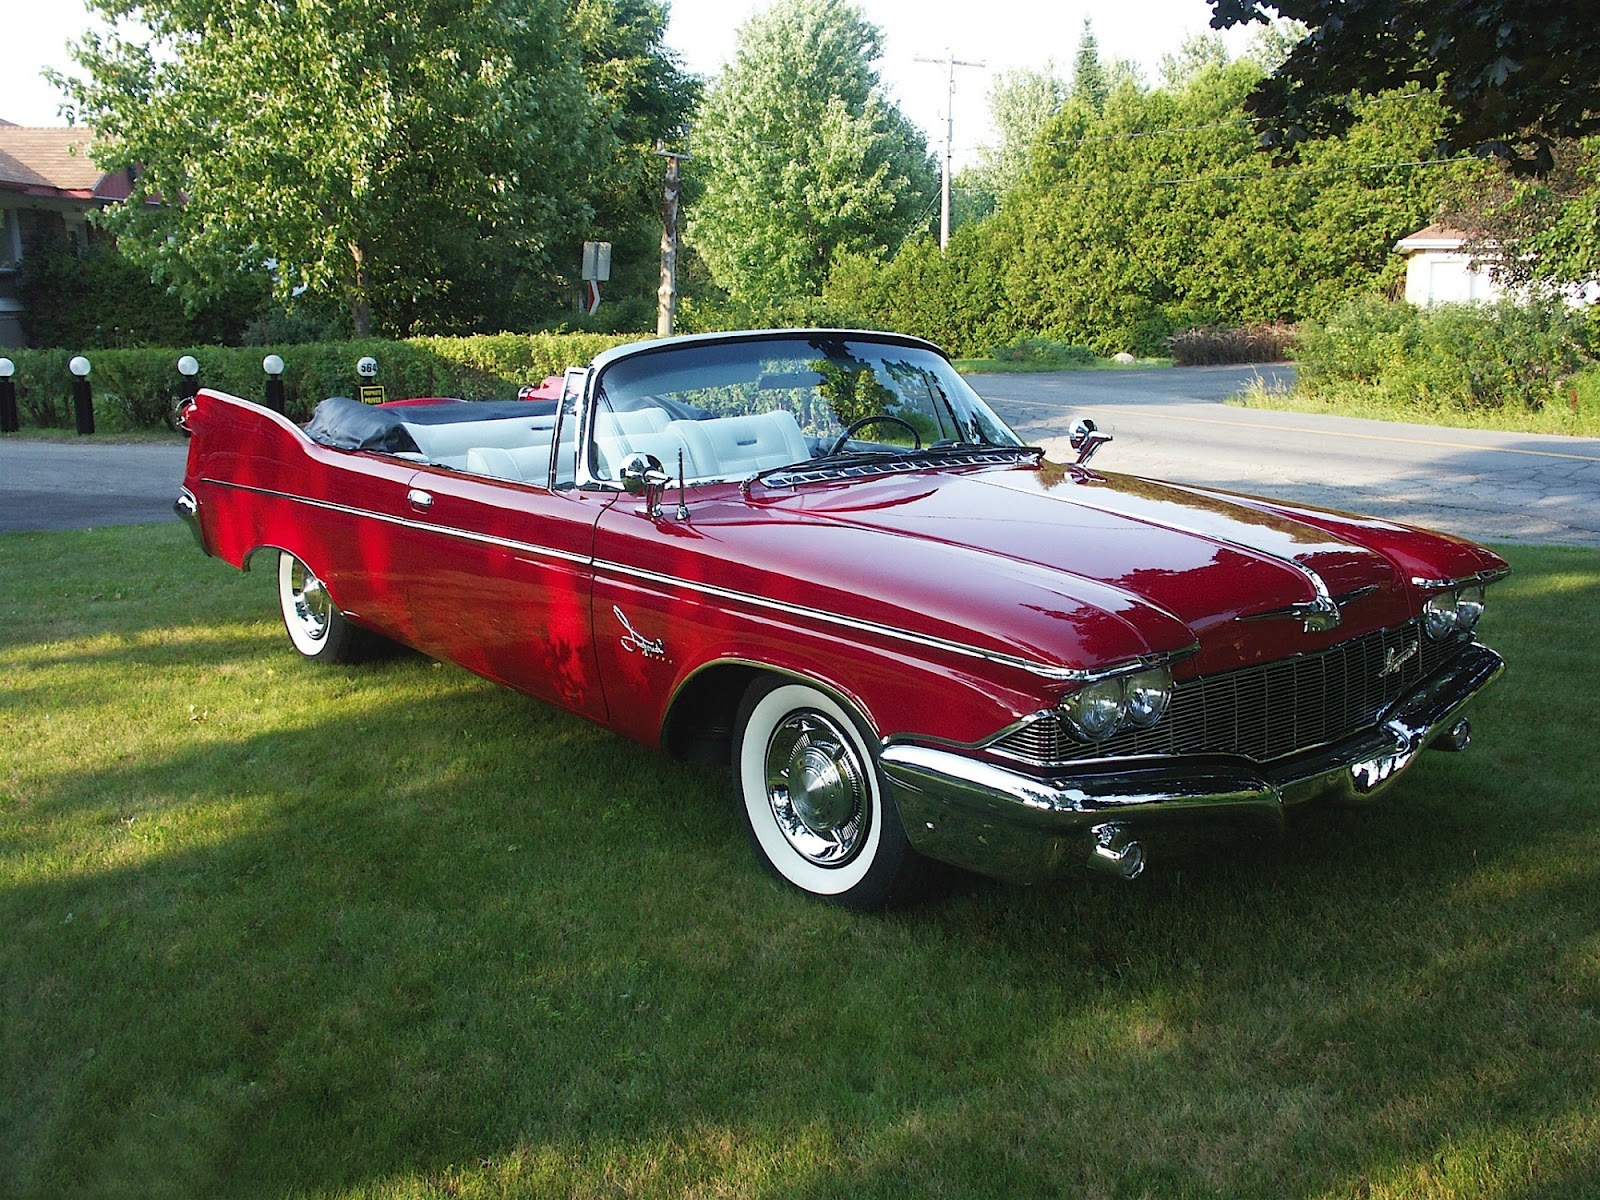 http://4.bp.blogspot.com/-X9fZ0b79aDg/UEjkJOoBPtI/AAAAAAAAApY/eVpvnieVOwI/s1600/Chrysler+1960.jpg